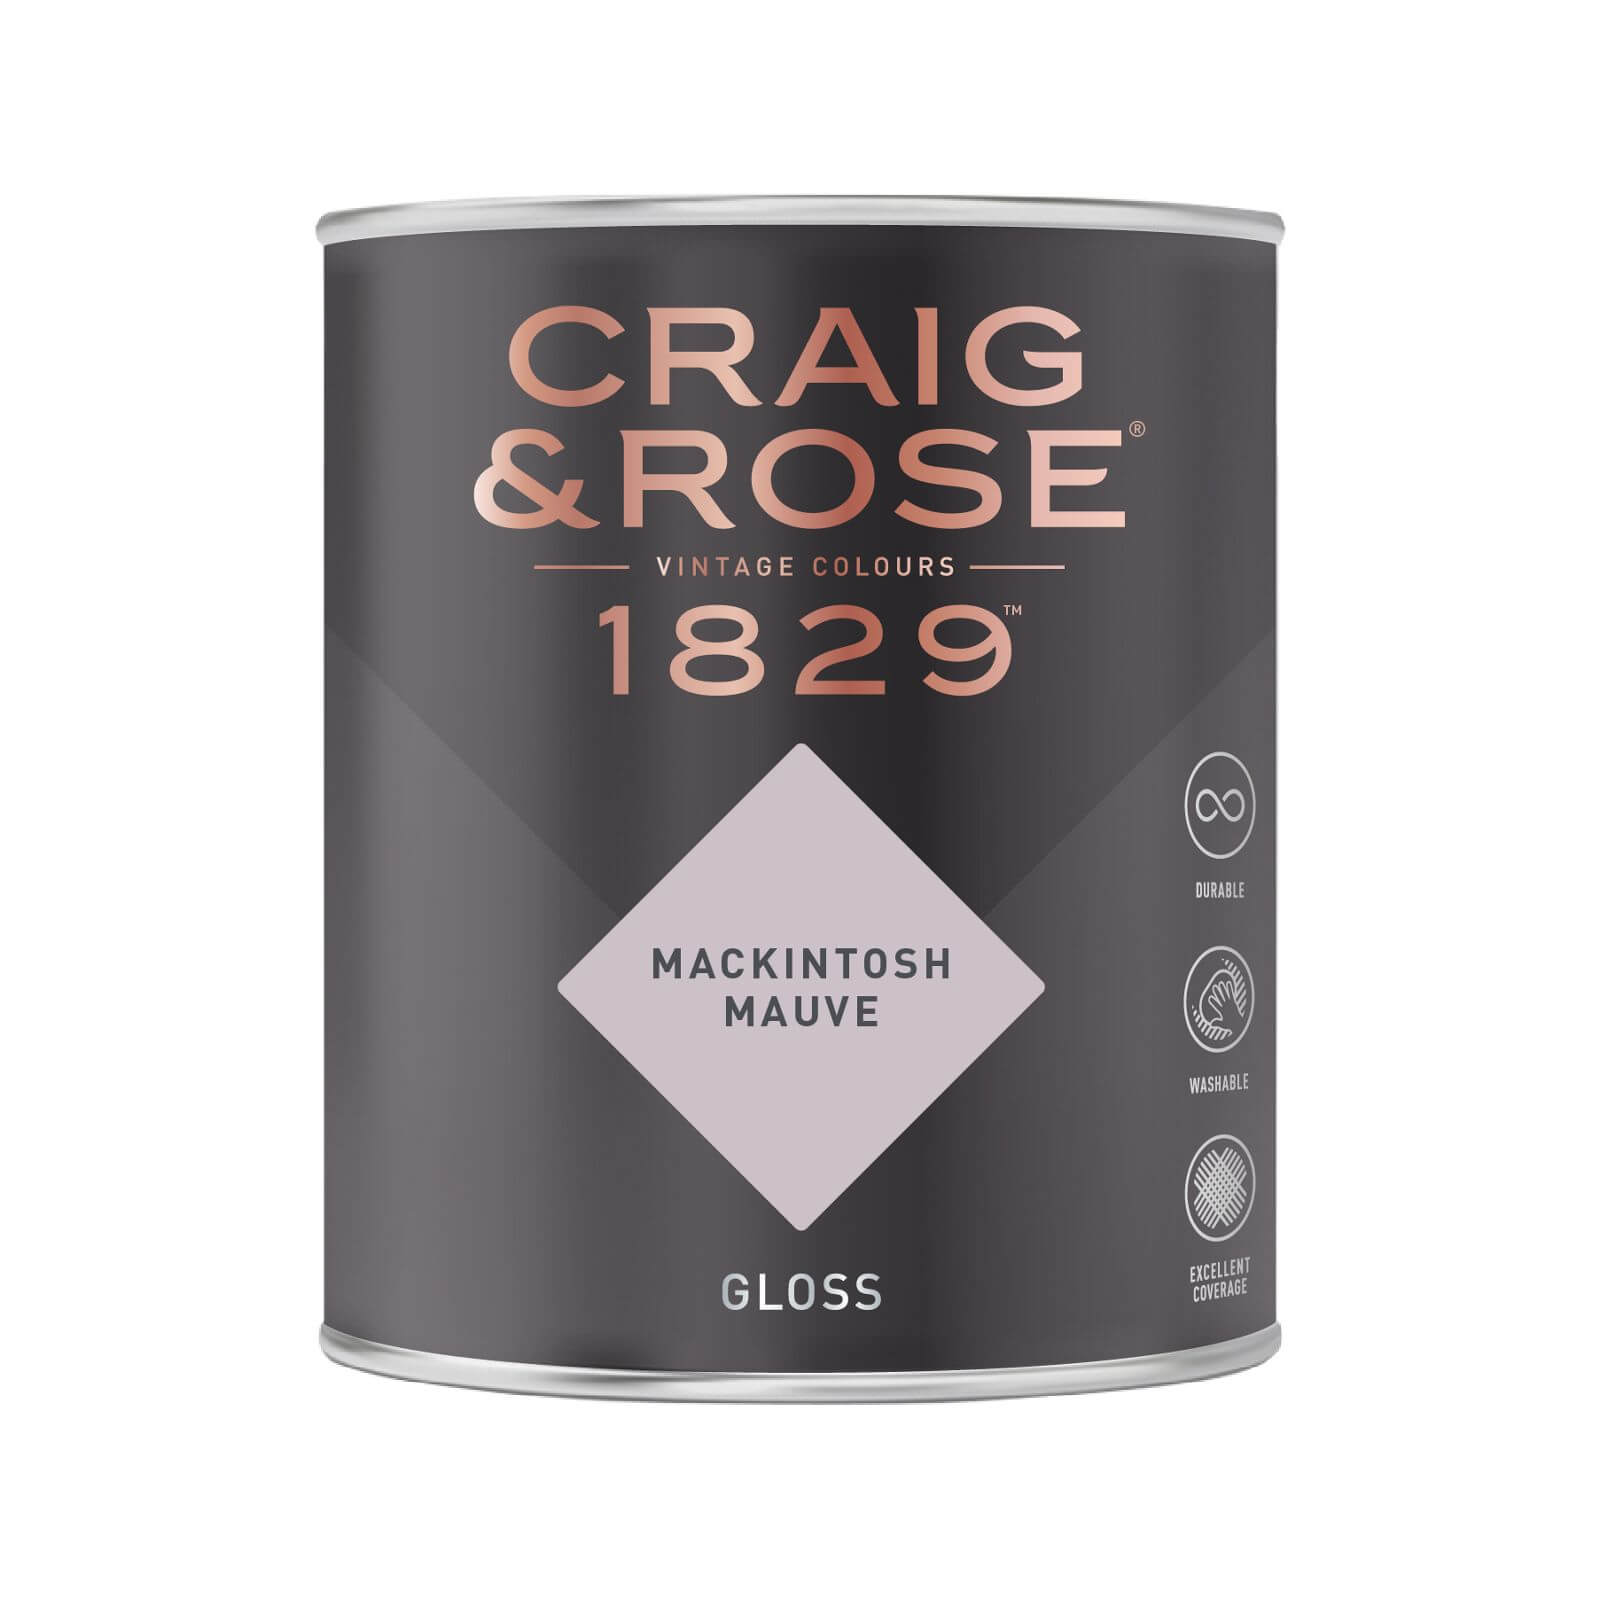 Craig & Rose 1829 Gloss Paint Mackintosh Mauve - 750ml